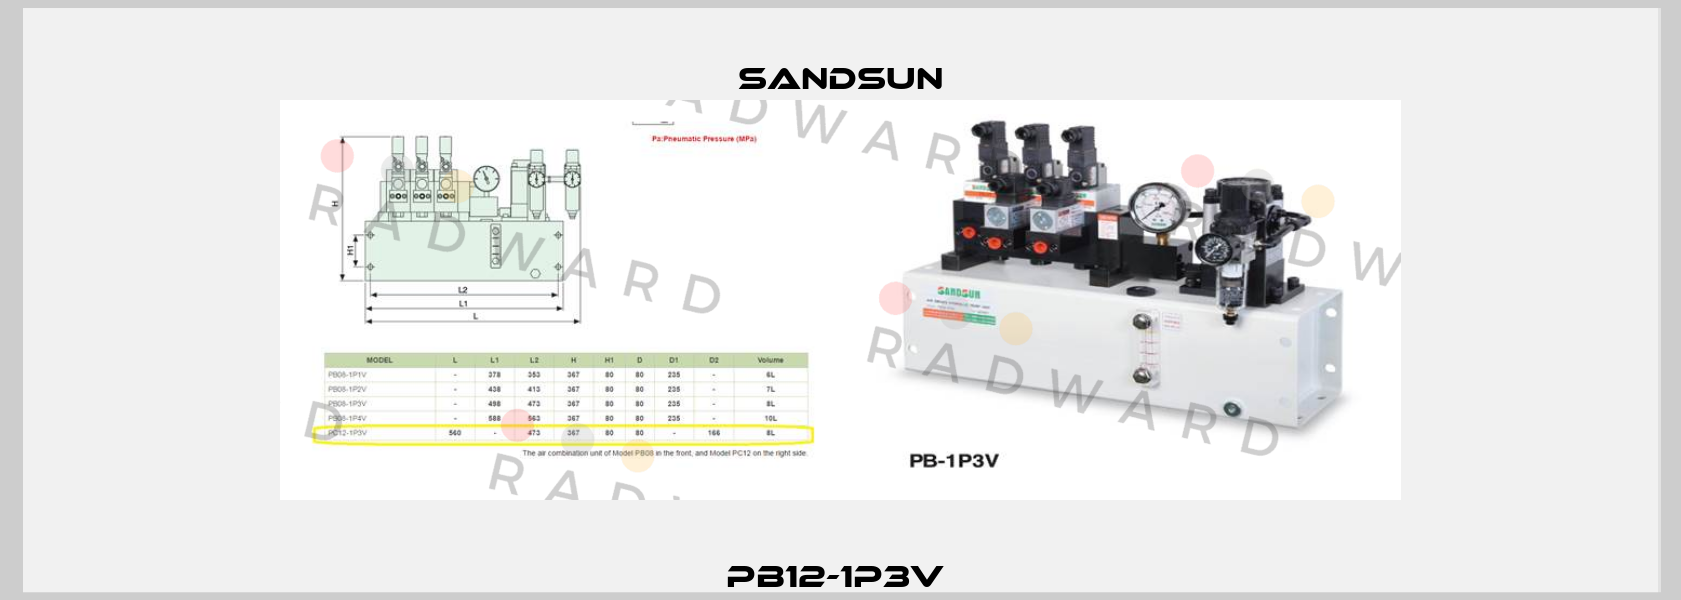 PB12-1P3V  Sandsun